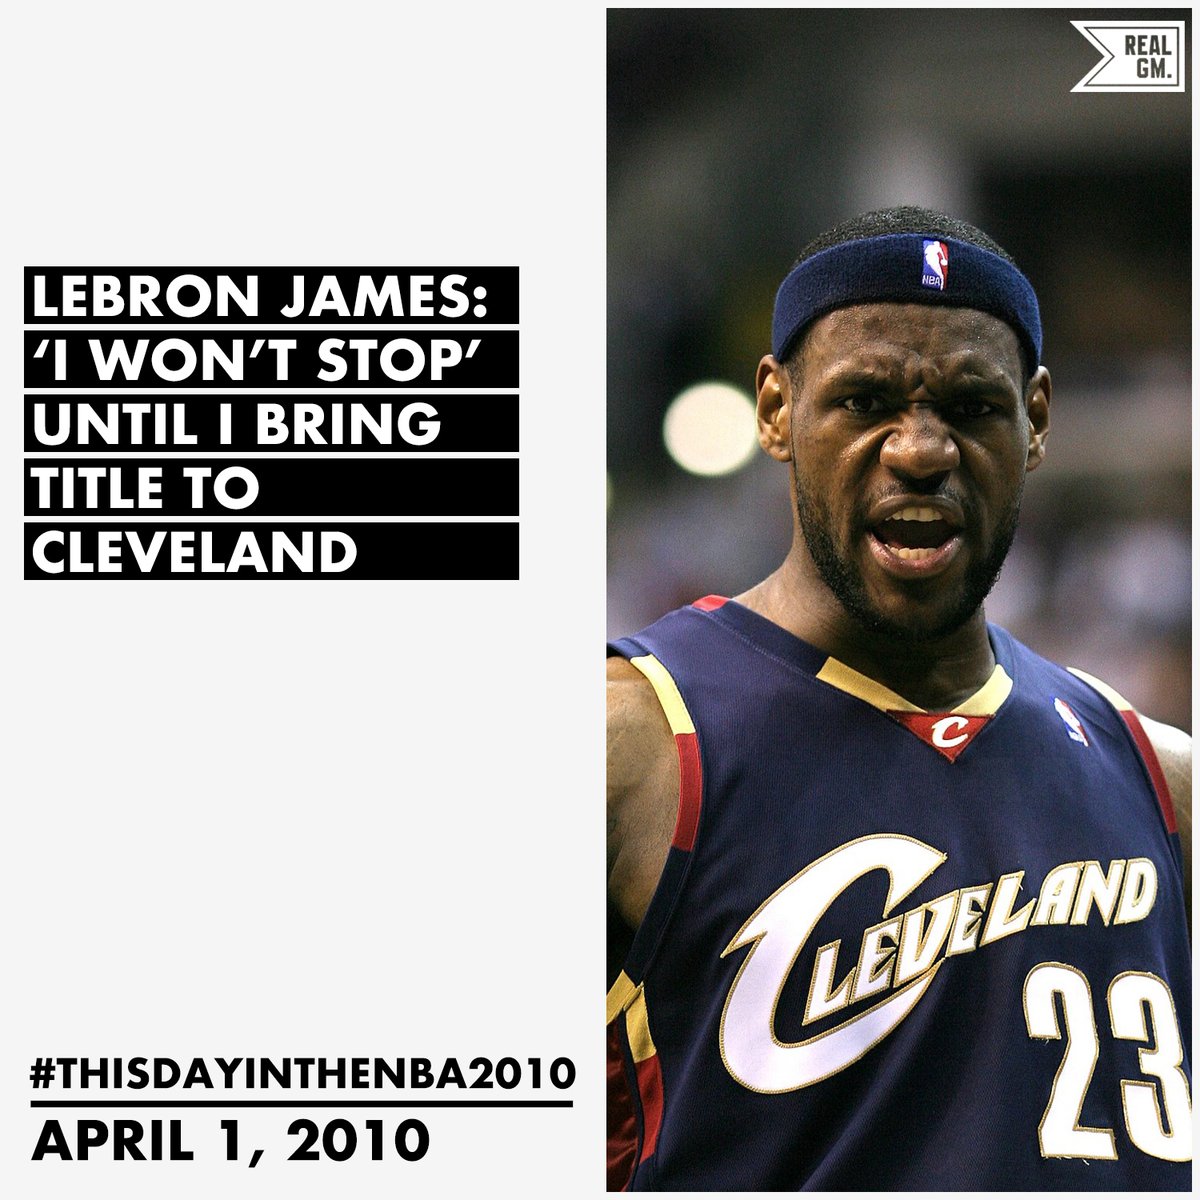  #ThisDayInTheNBA2010April 1, 2010LeBron James: 'I Won't Stop' Until I Bring Title To Cleveland  https://basketball.realgm.com/wiretap/203035/LeBron-I-Wont-Stop-Until-I-Bring-Title-To-Cleveland